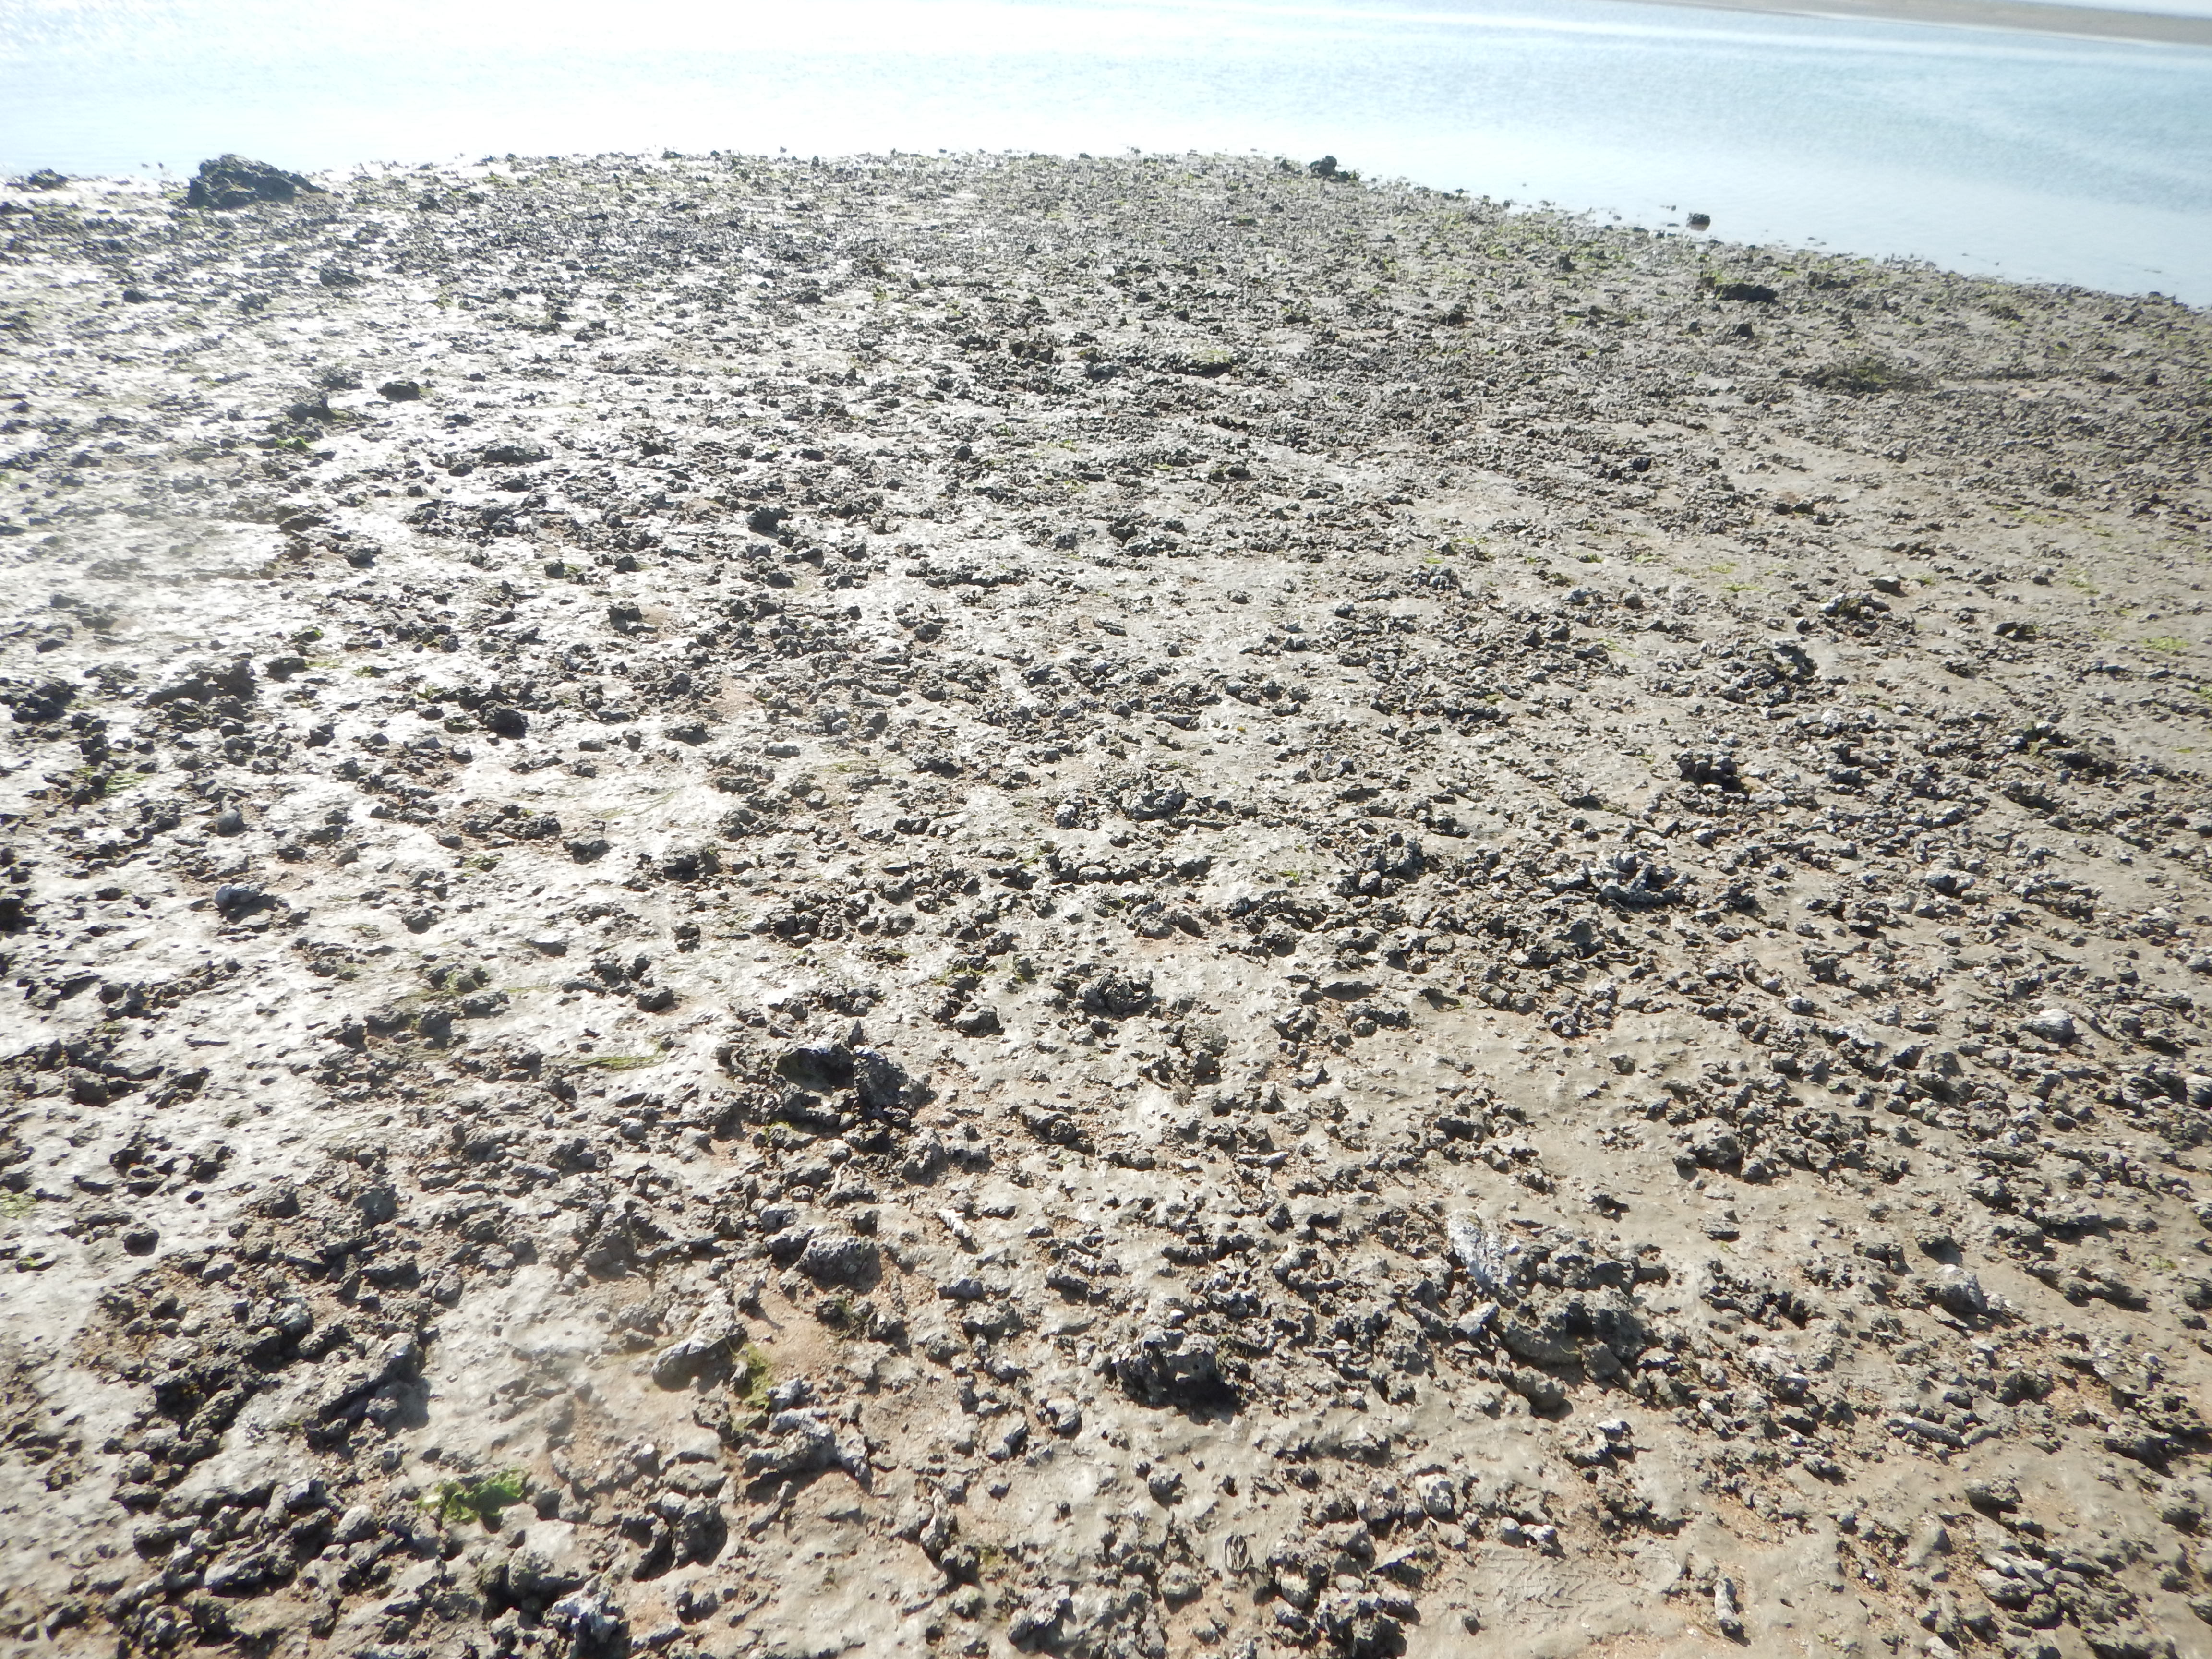 Dead Acropora Stag-horn Corals strewn across an island